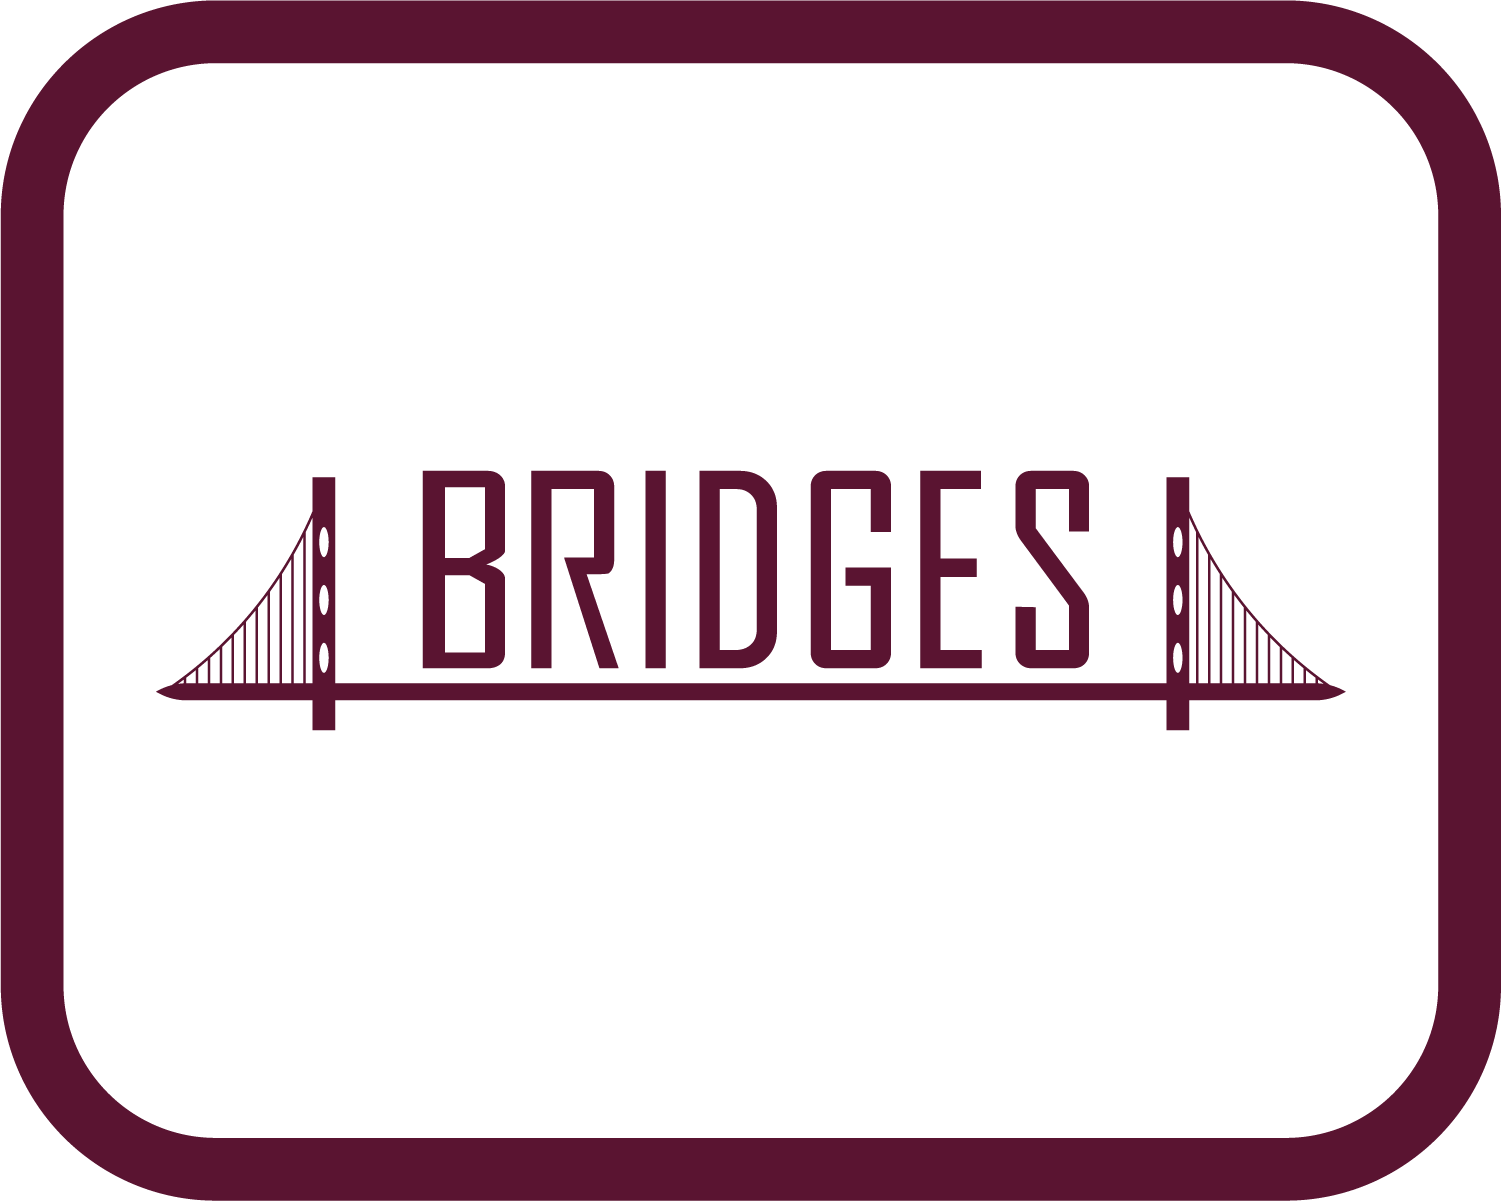 Bridges-01.png